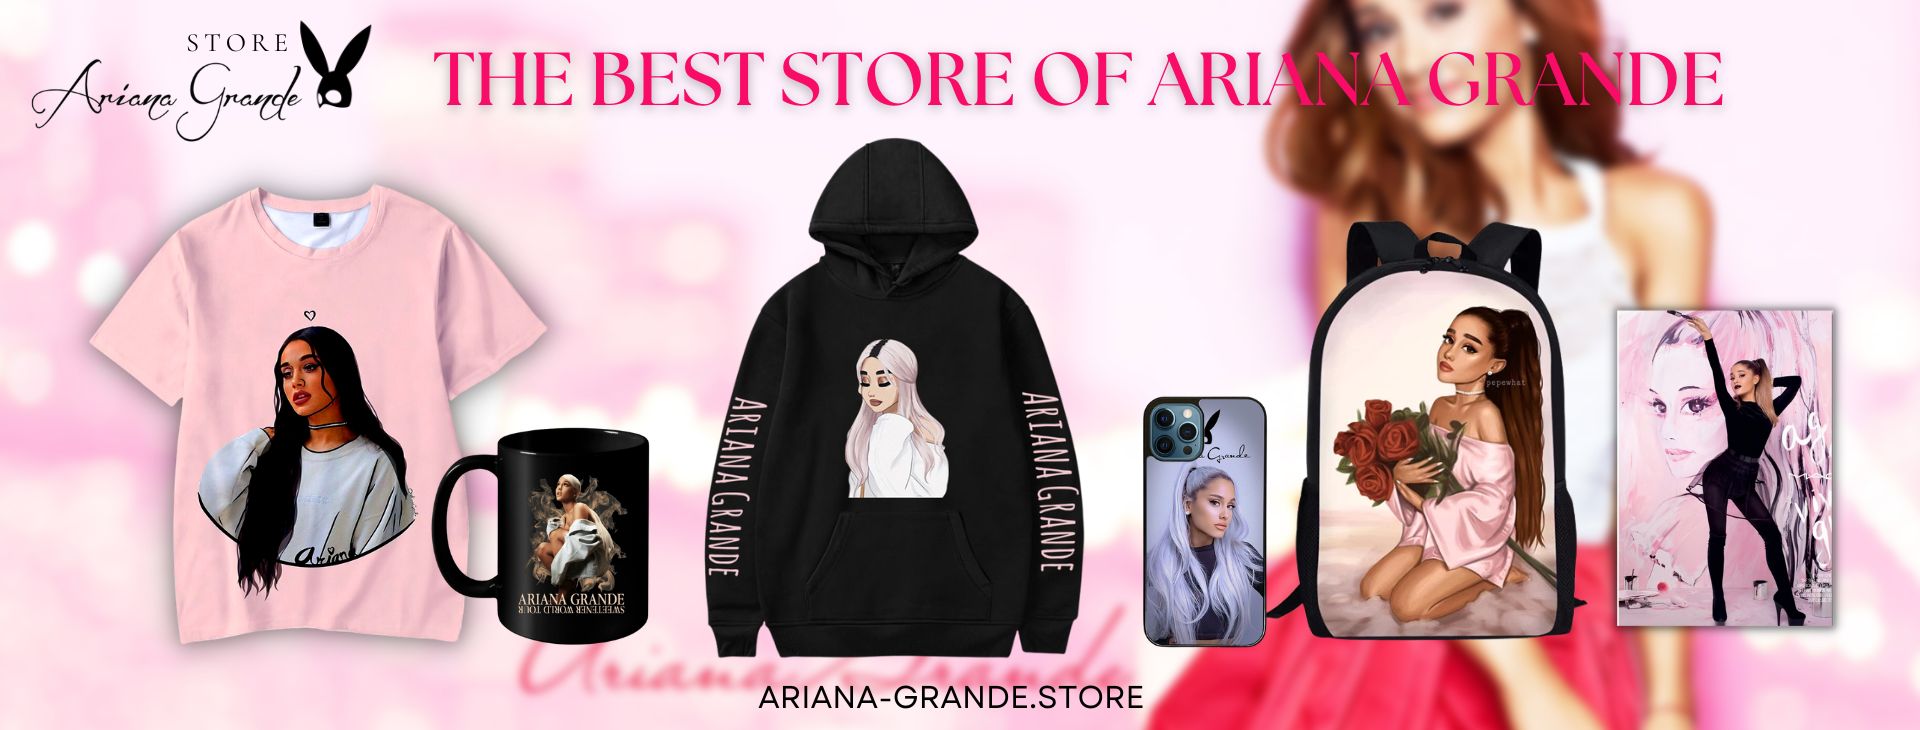 Ariana Grande Store Banners - Ariana Grande Store